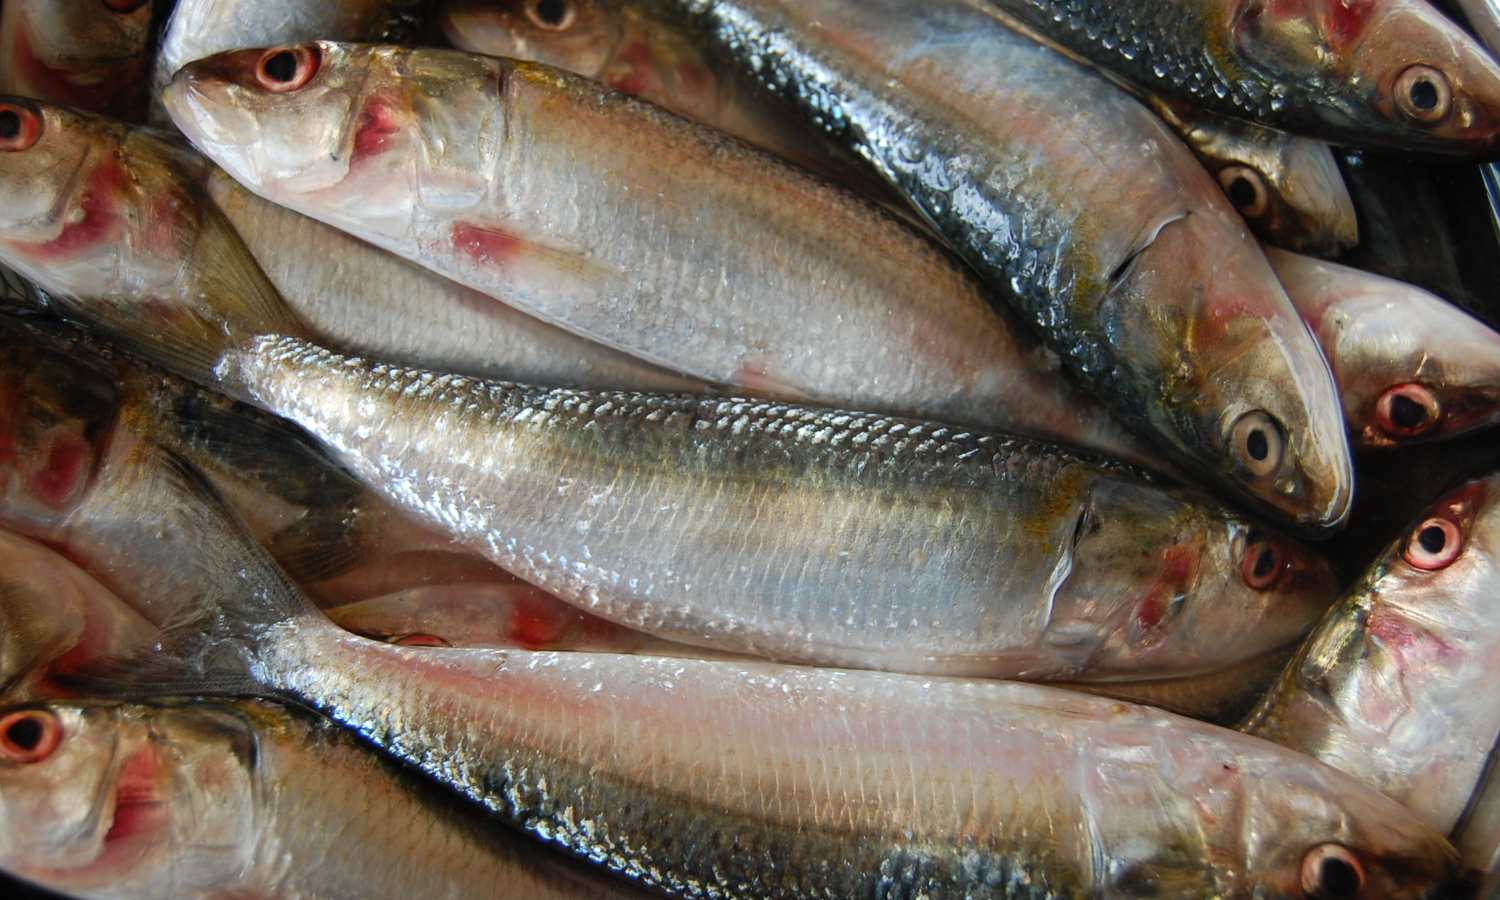 How to clean sardine easily